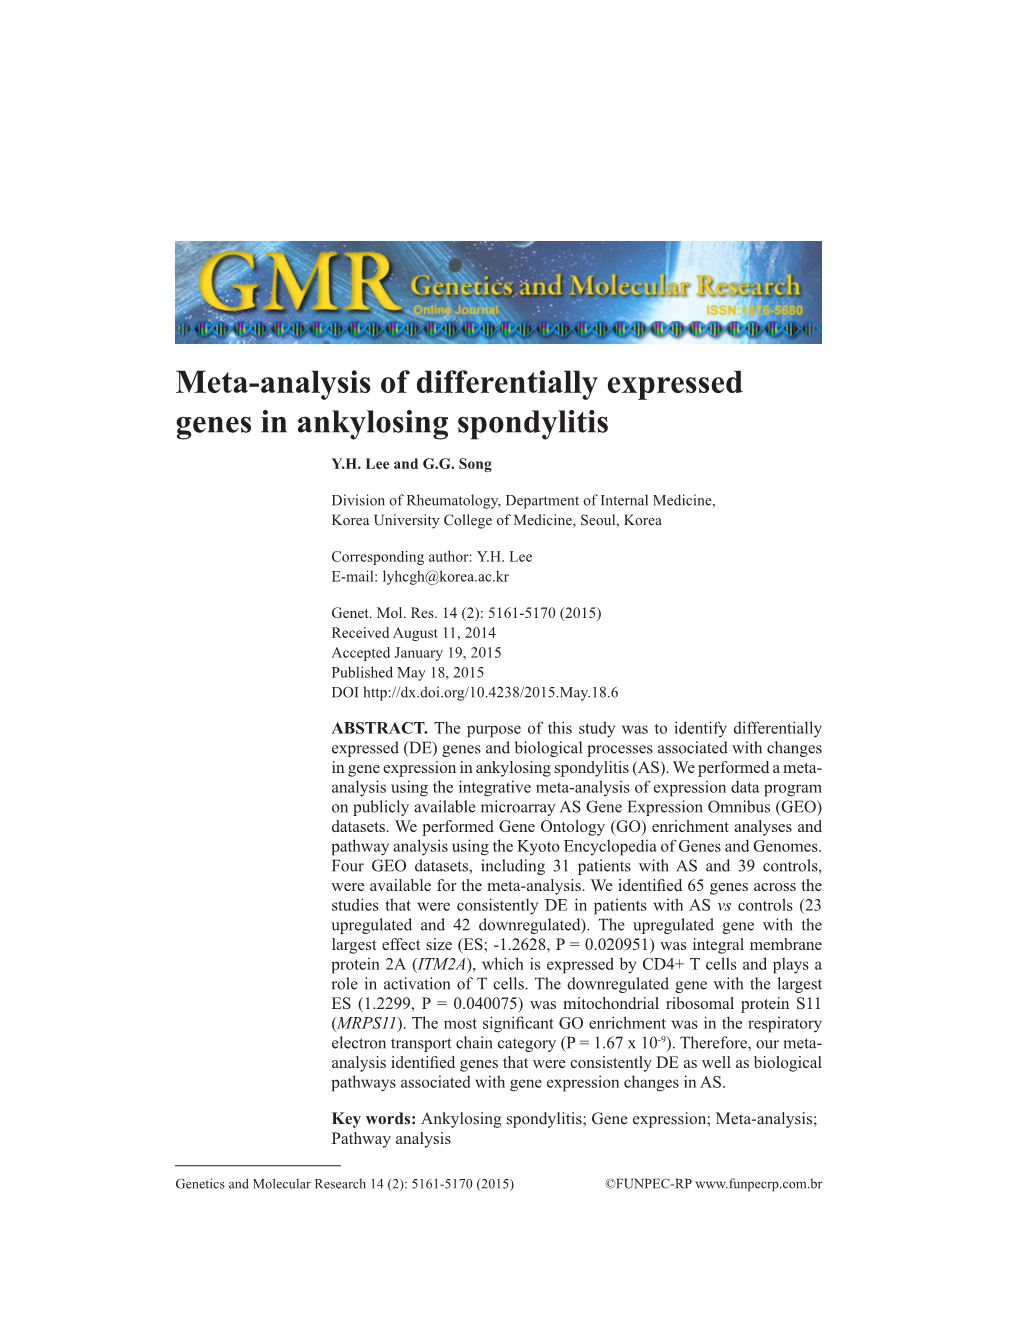 Meta-Analysis of Differentially Expressed Genes in Ankylosing Spondylitis Y.H